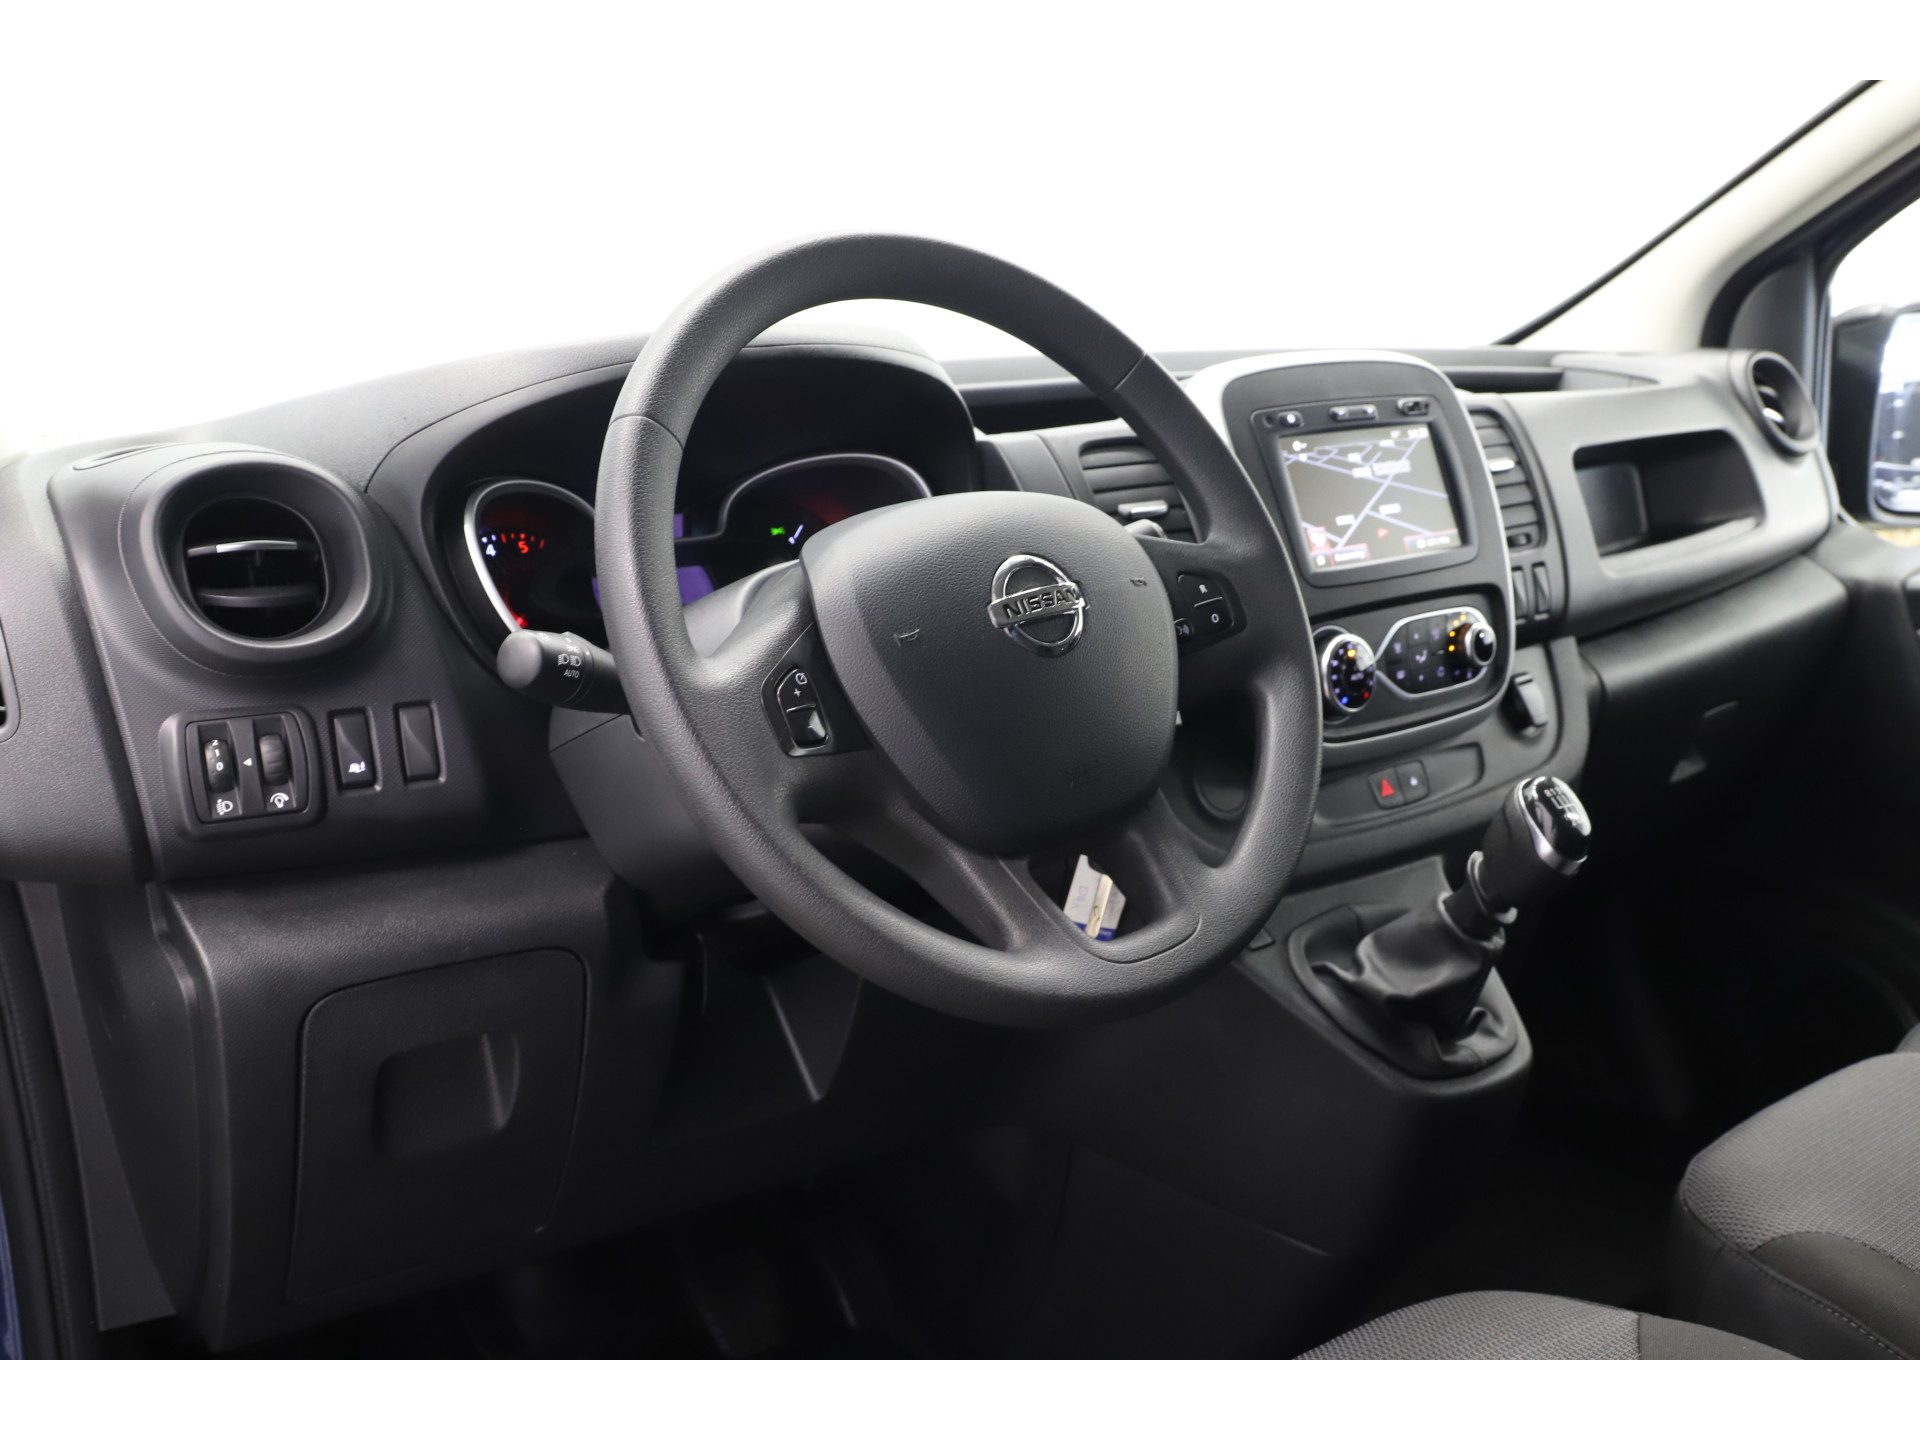 Opel - Vivaro (Nissan NV300) 1.6 dCi 95 L1H1 Acenta - 2020